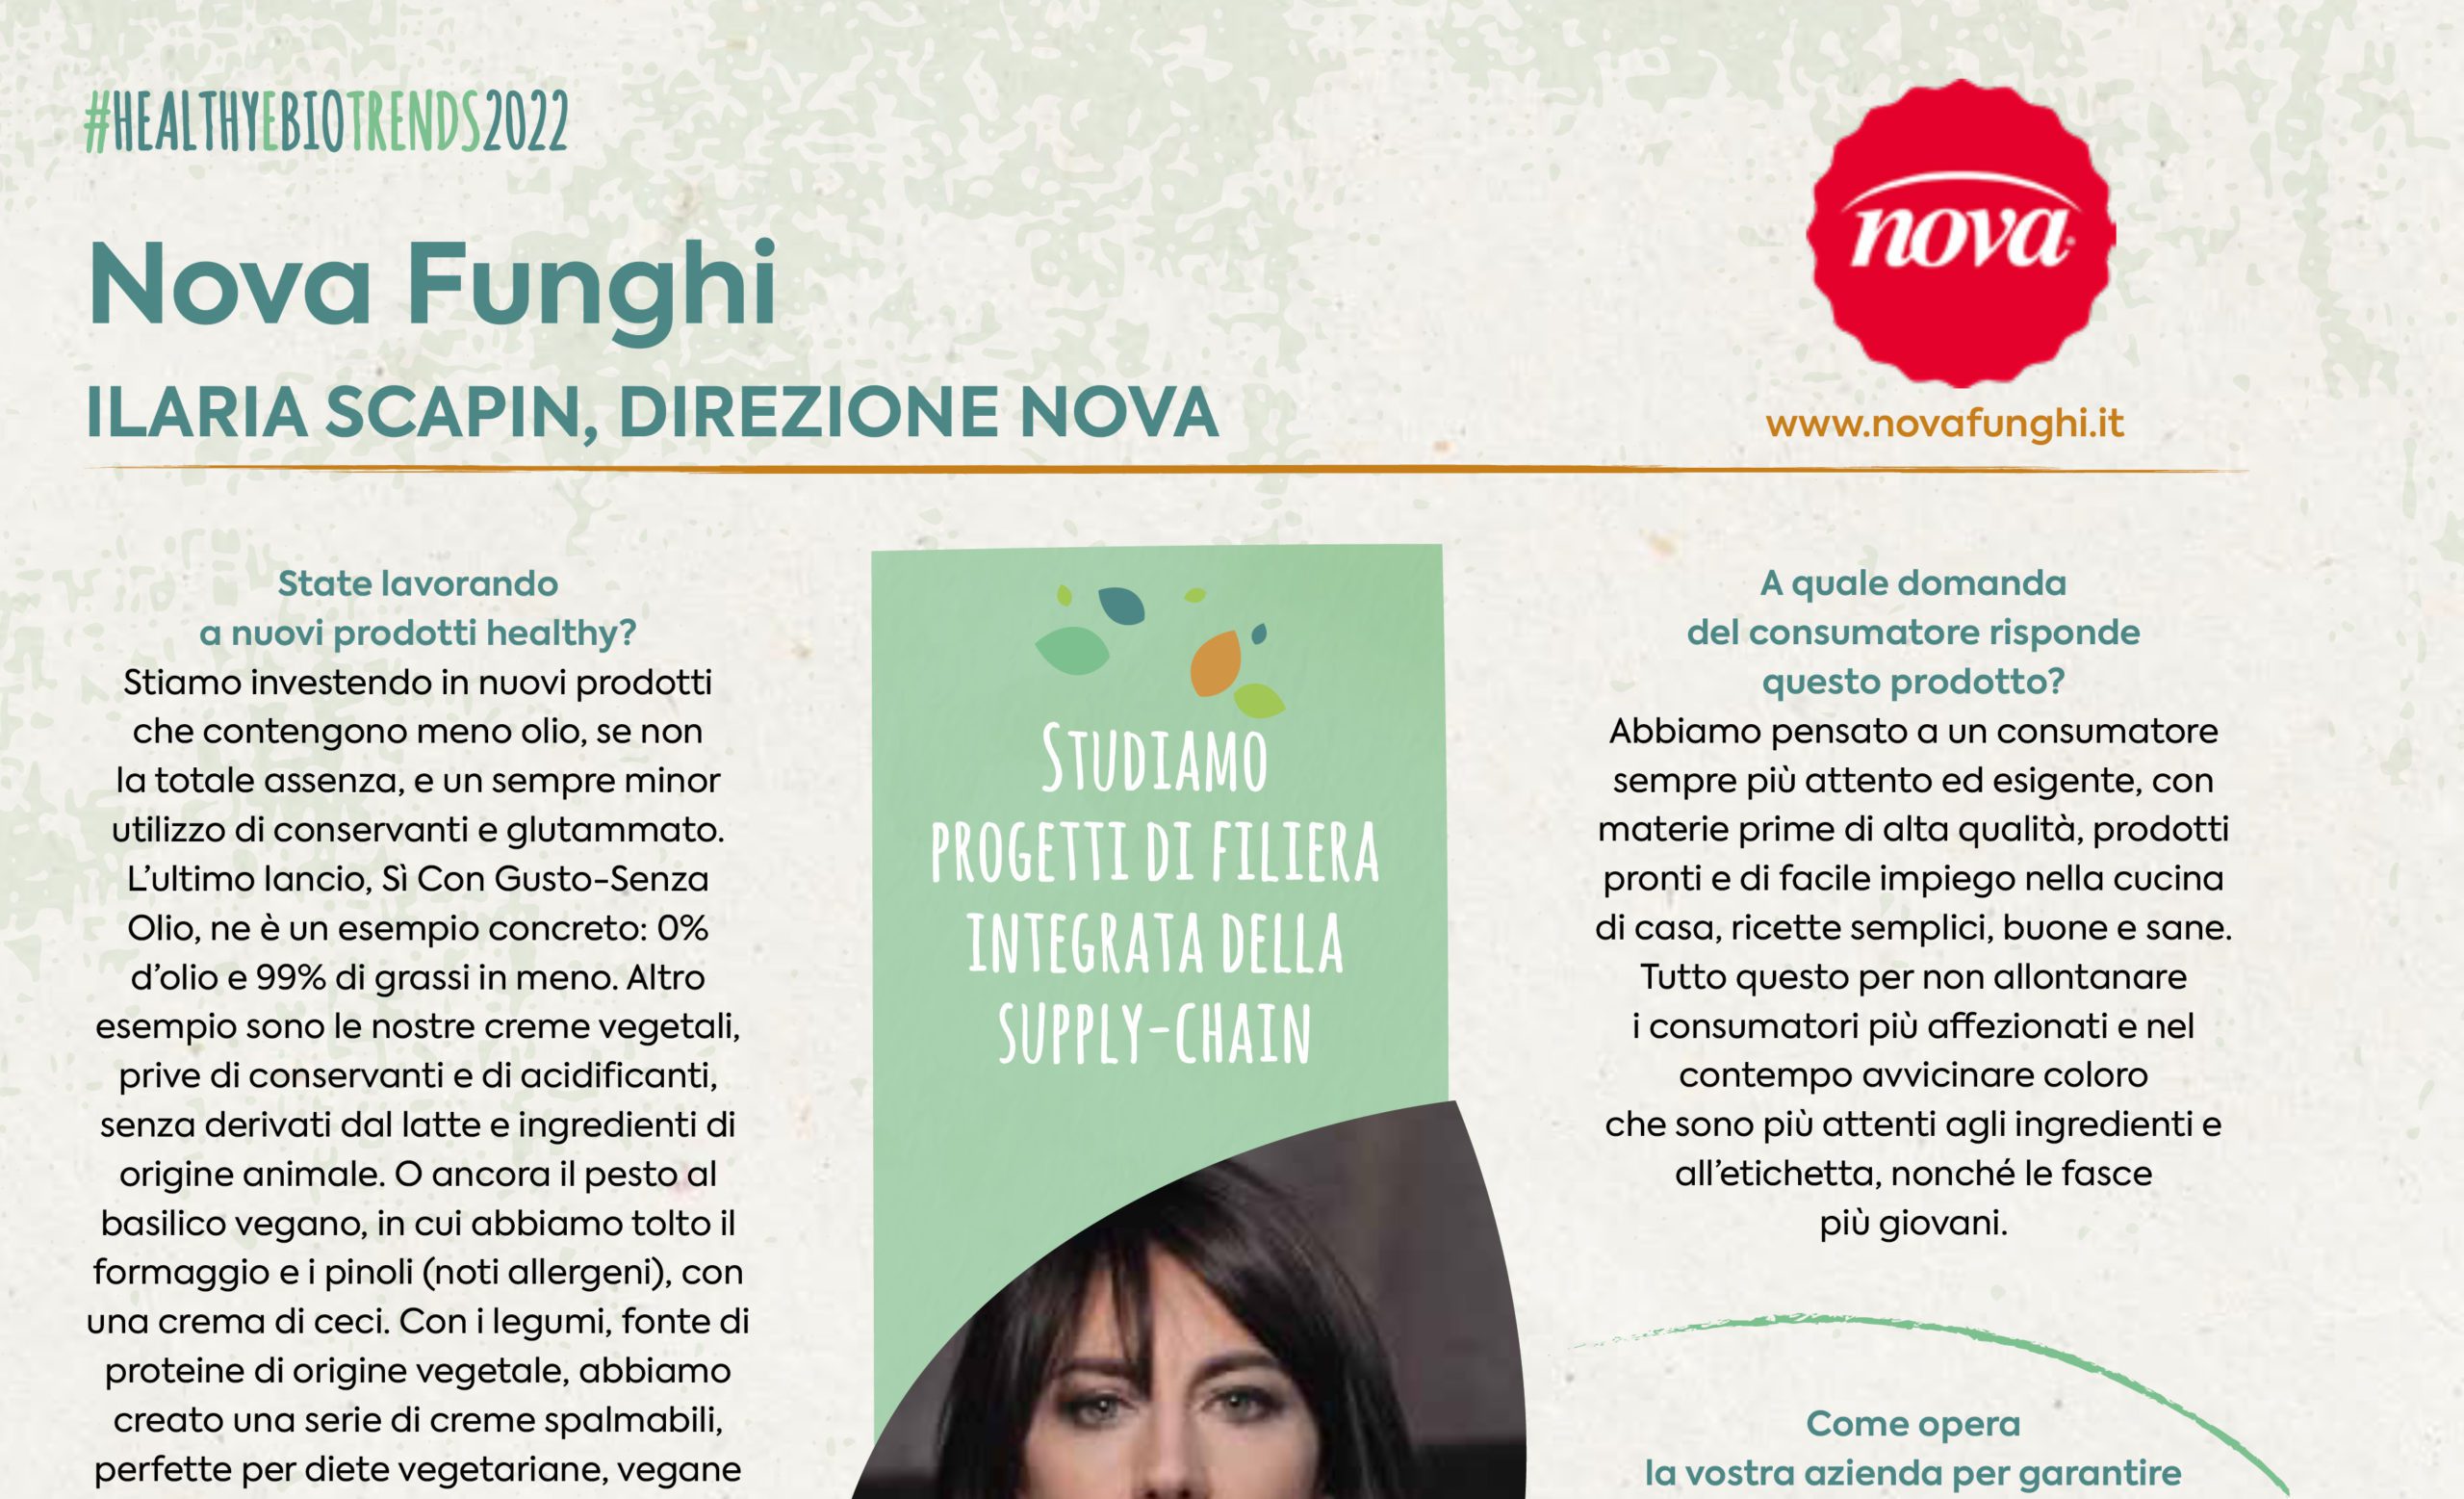 Nova Funghi per HEALTHY E BIO TRENDS 2022